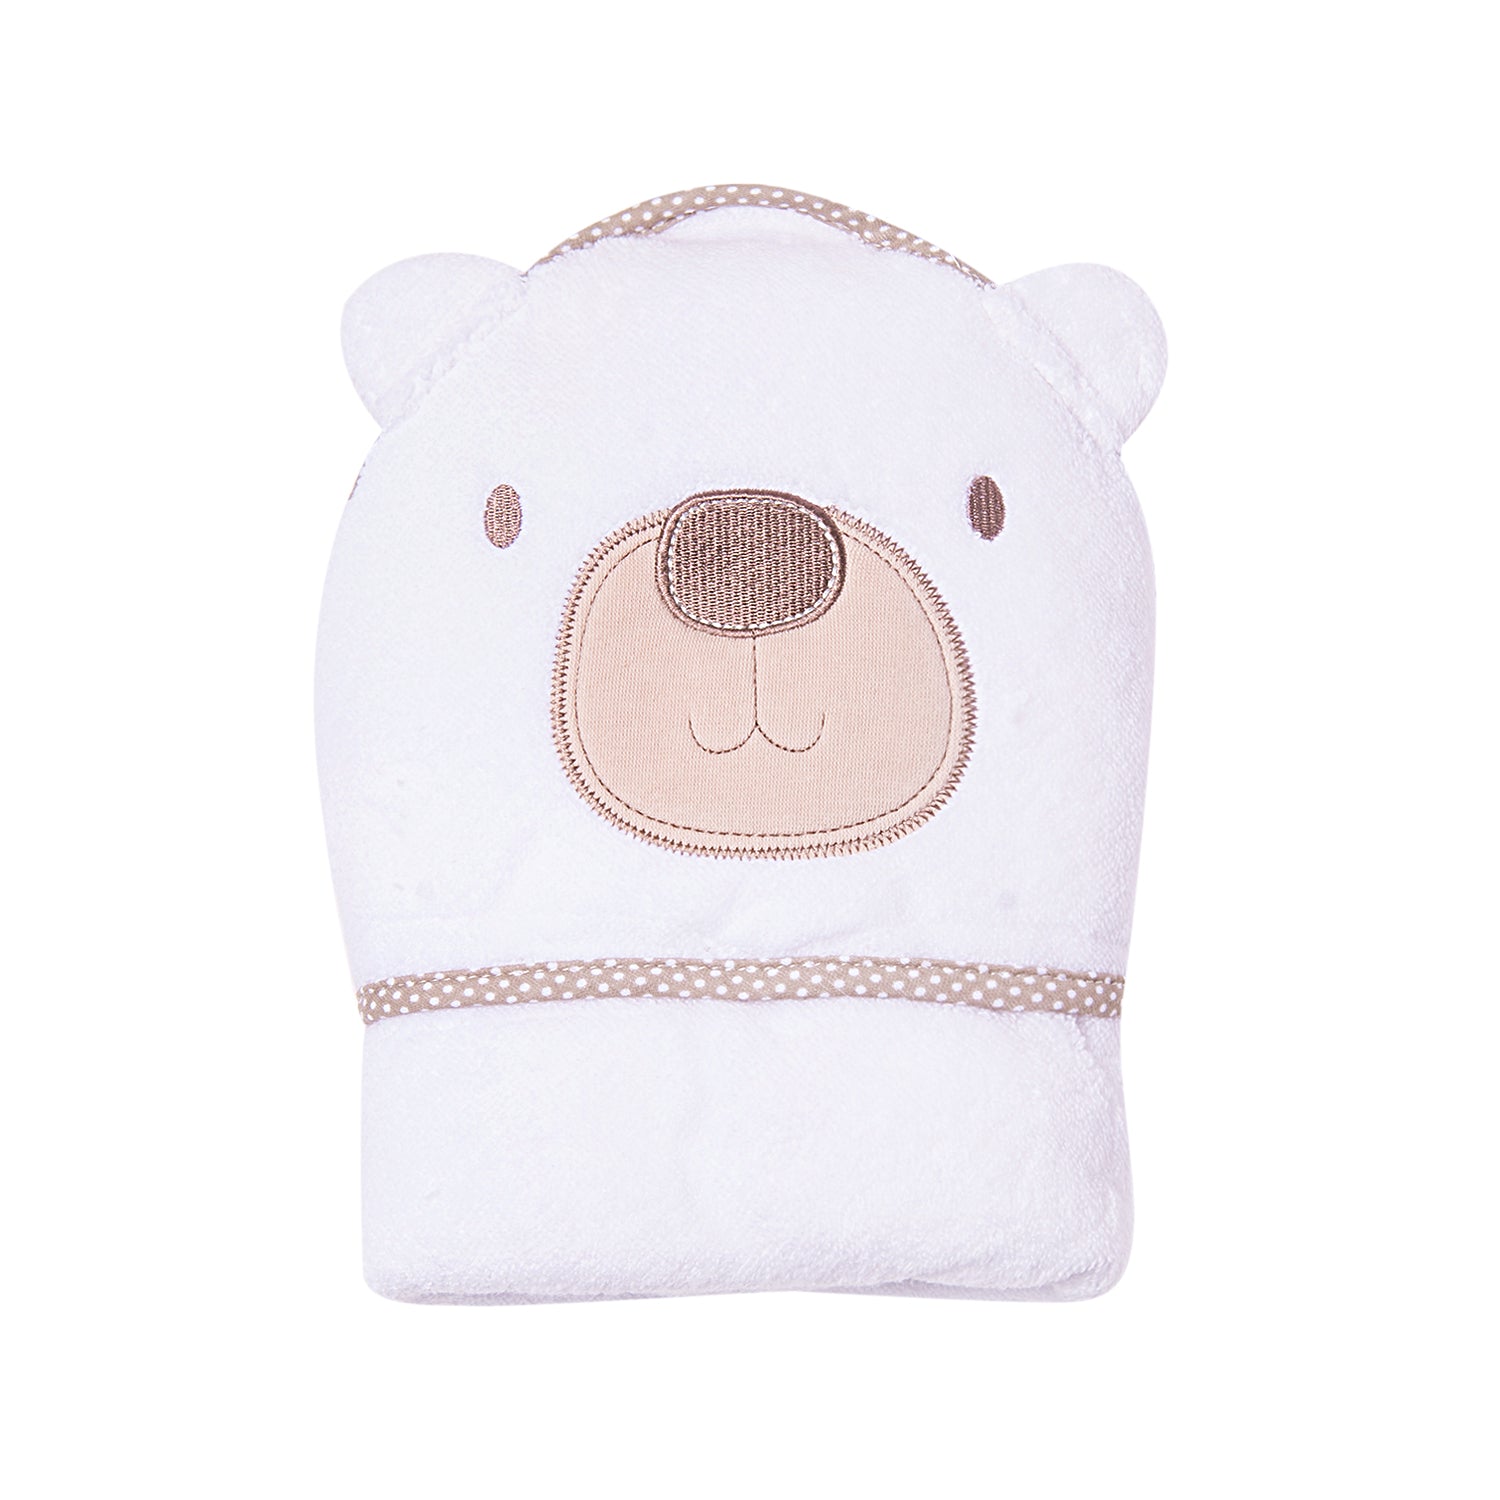 Premium Teddy Unisex Gift Hamper 0-18 M - Baby Moo